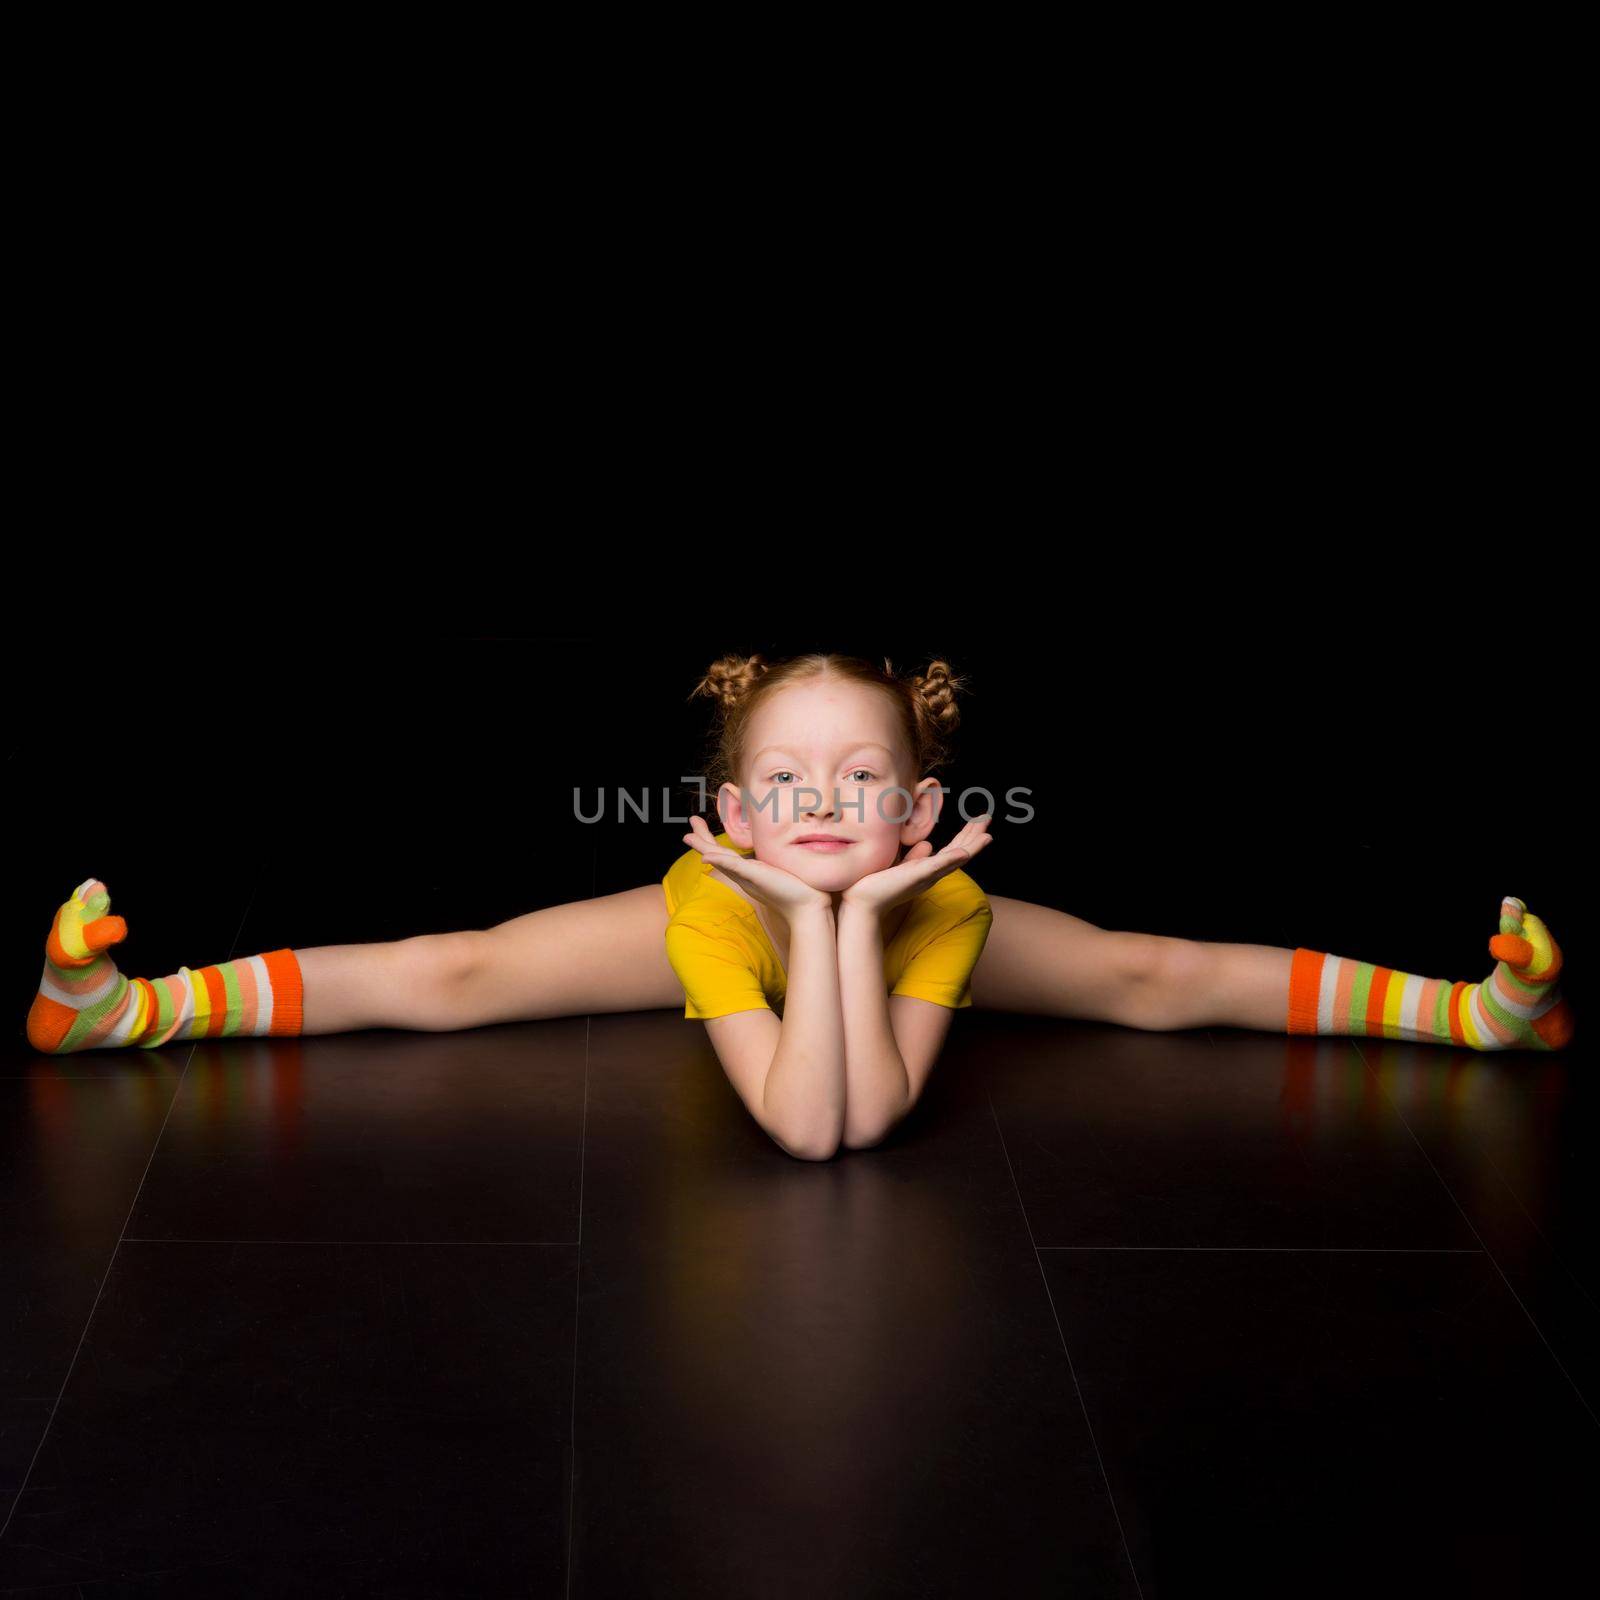 Cute happy young girl gymnast doing cross splits by kolesnikov_studio